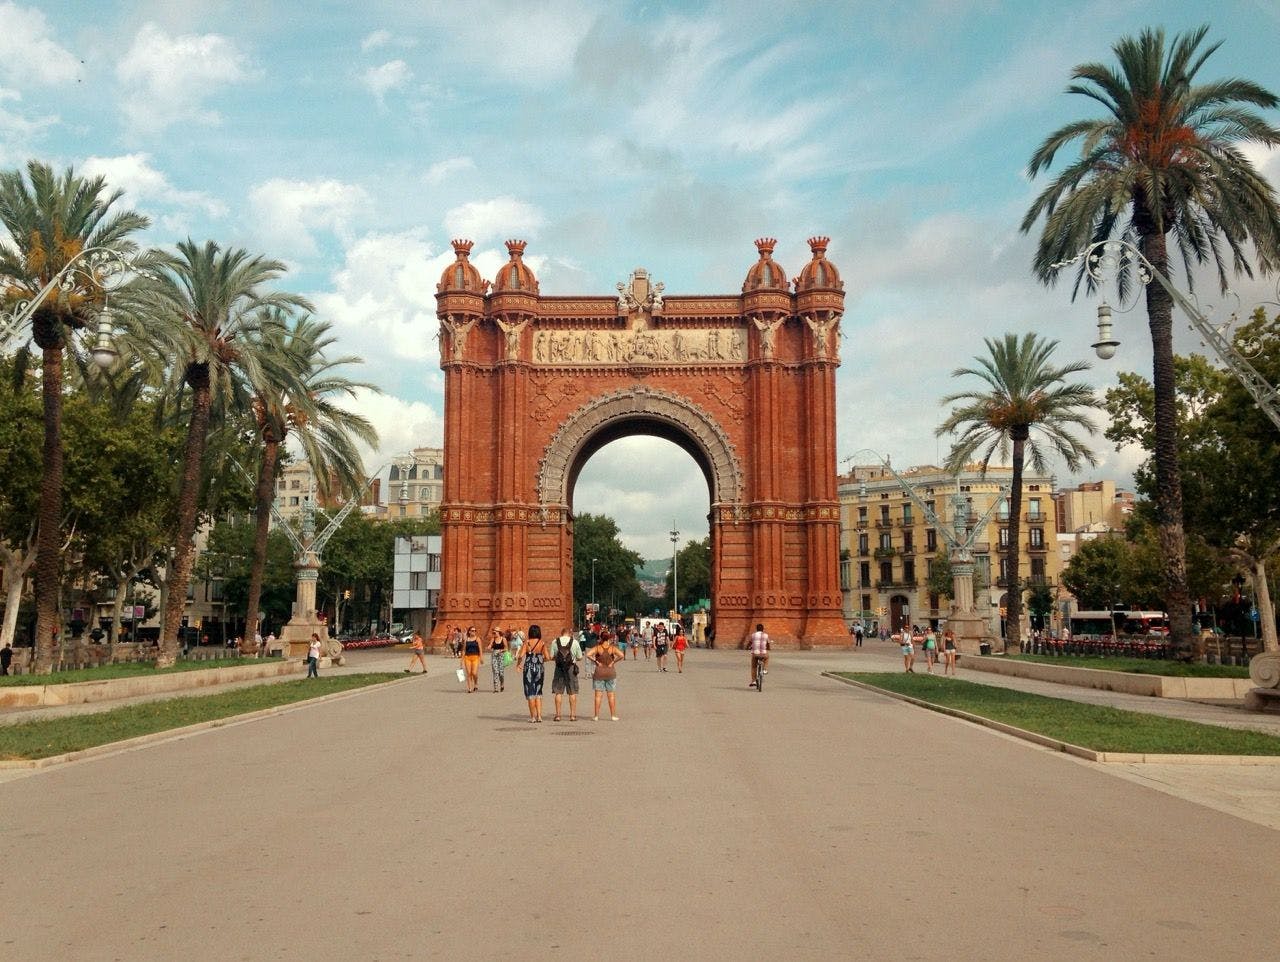 People walking under Arc de Triomf in Barcelona